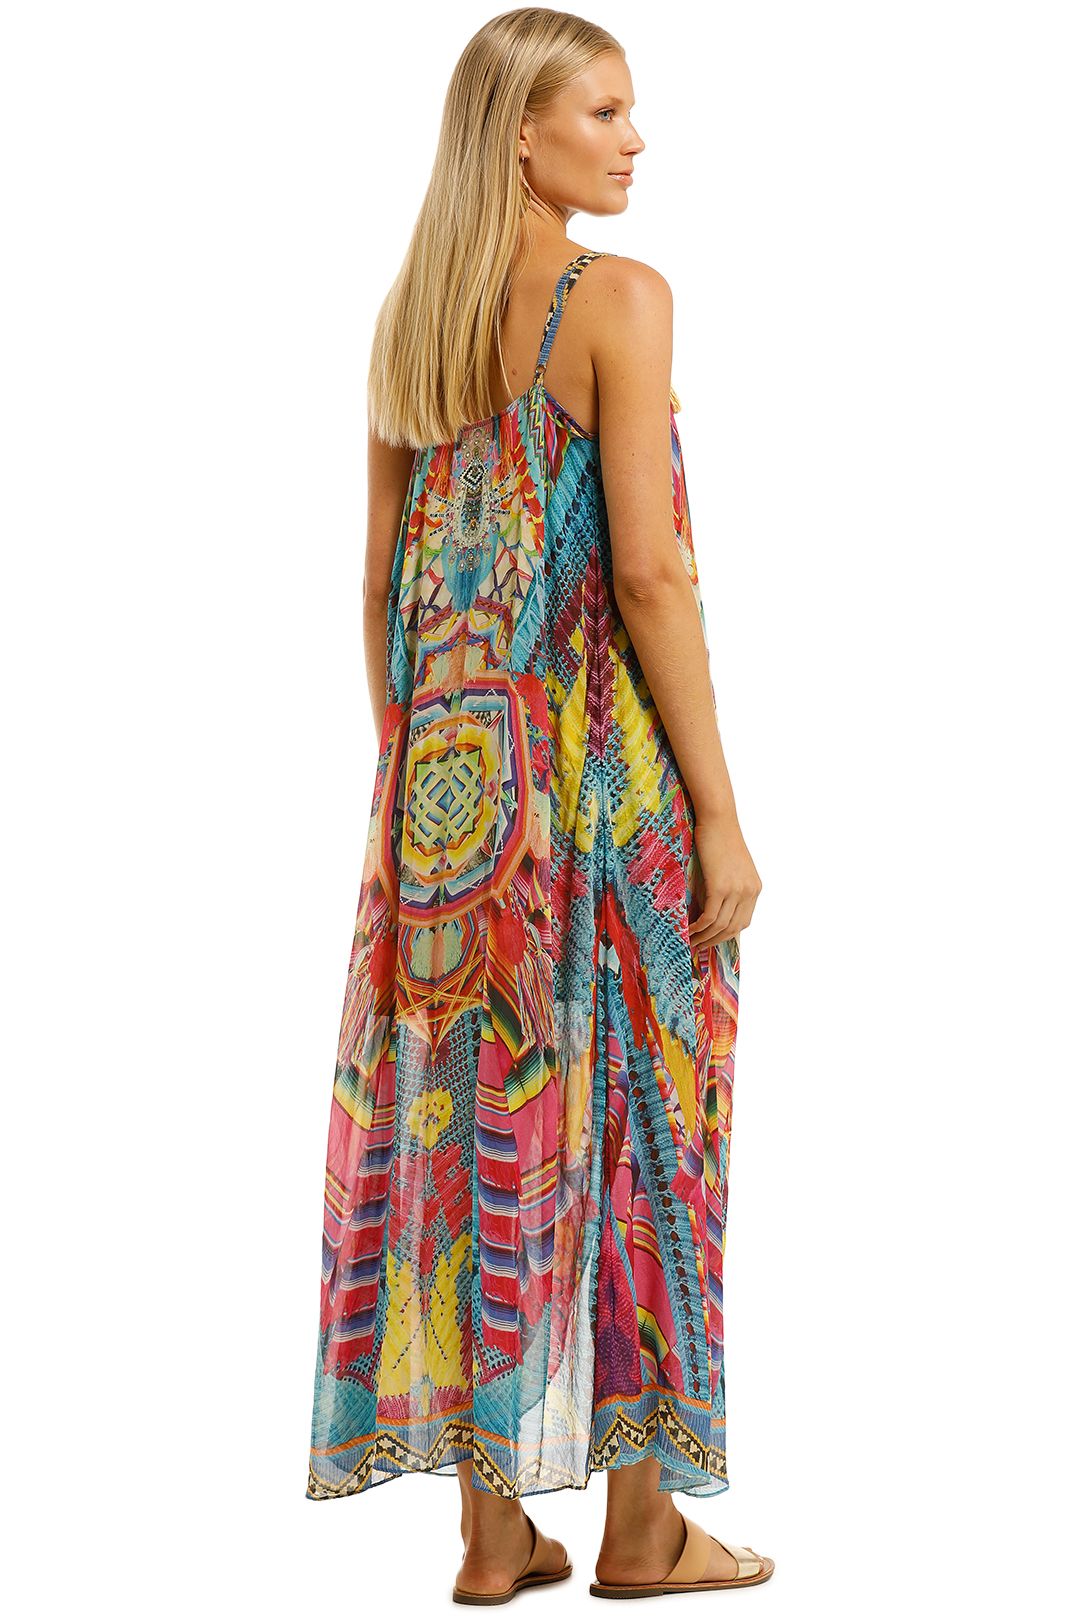 Camilla - Ms Mochilla Mini Dress with Long Overlay - Prints - Back